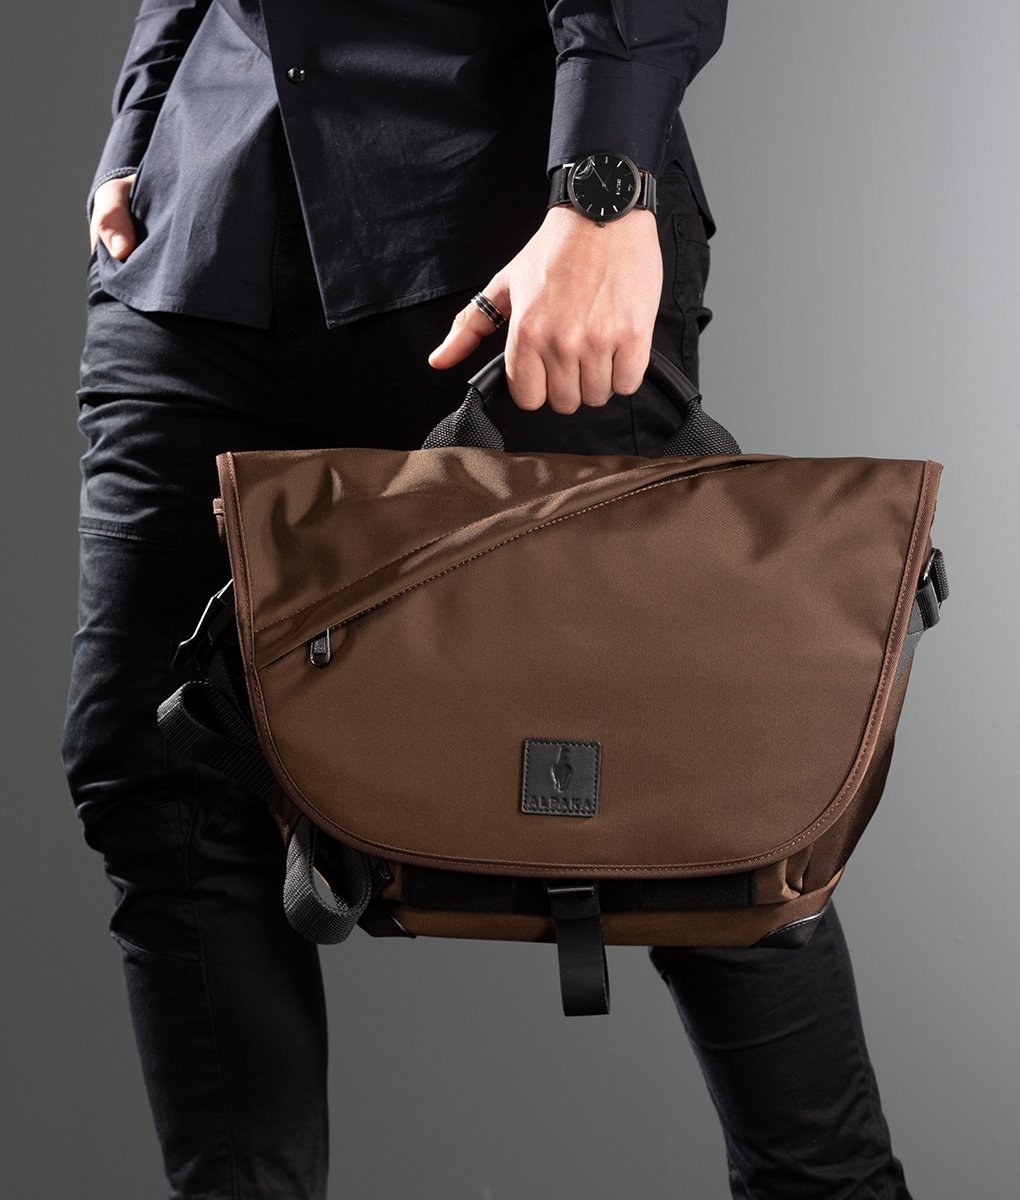 BFB Replacement Shoulder Straps Black Make Your Purse Handbag Laptop Bag Briefcase Messenger Travel Tote Satchel Look with Detachable Vegan Patent Leather Designer Handles 